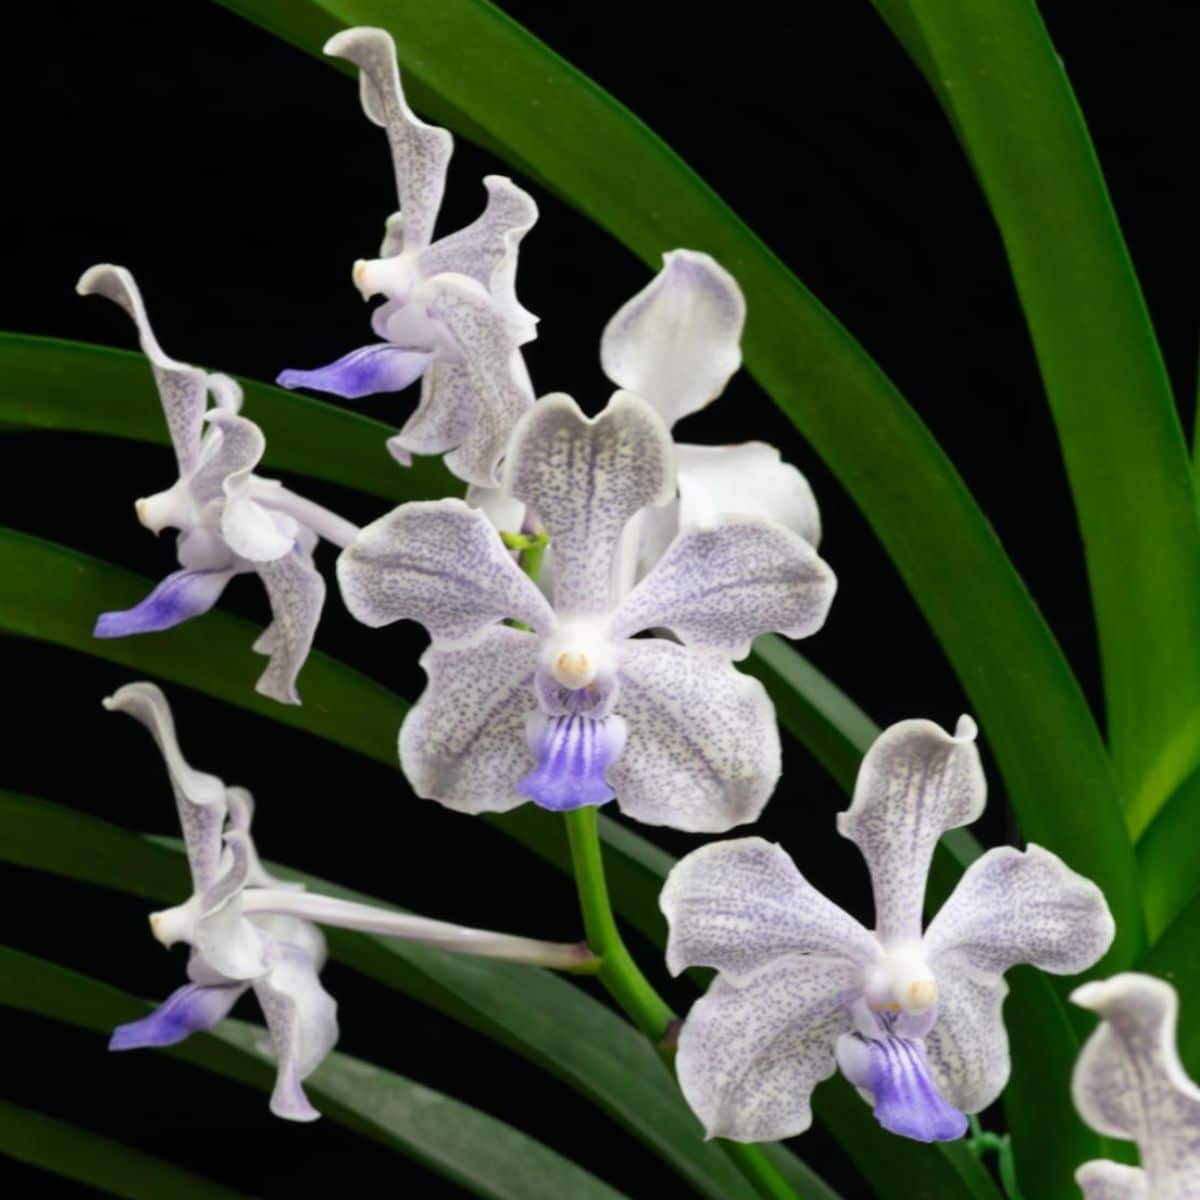 A Vanda Norgard GEM orchid.